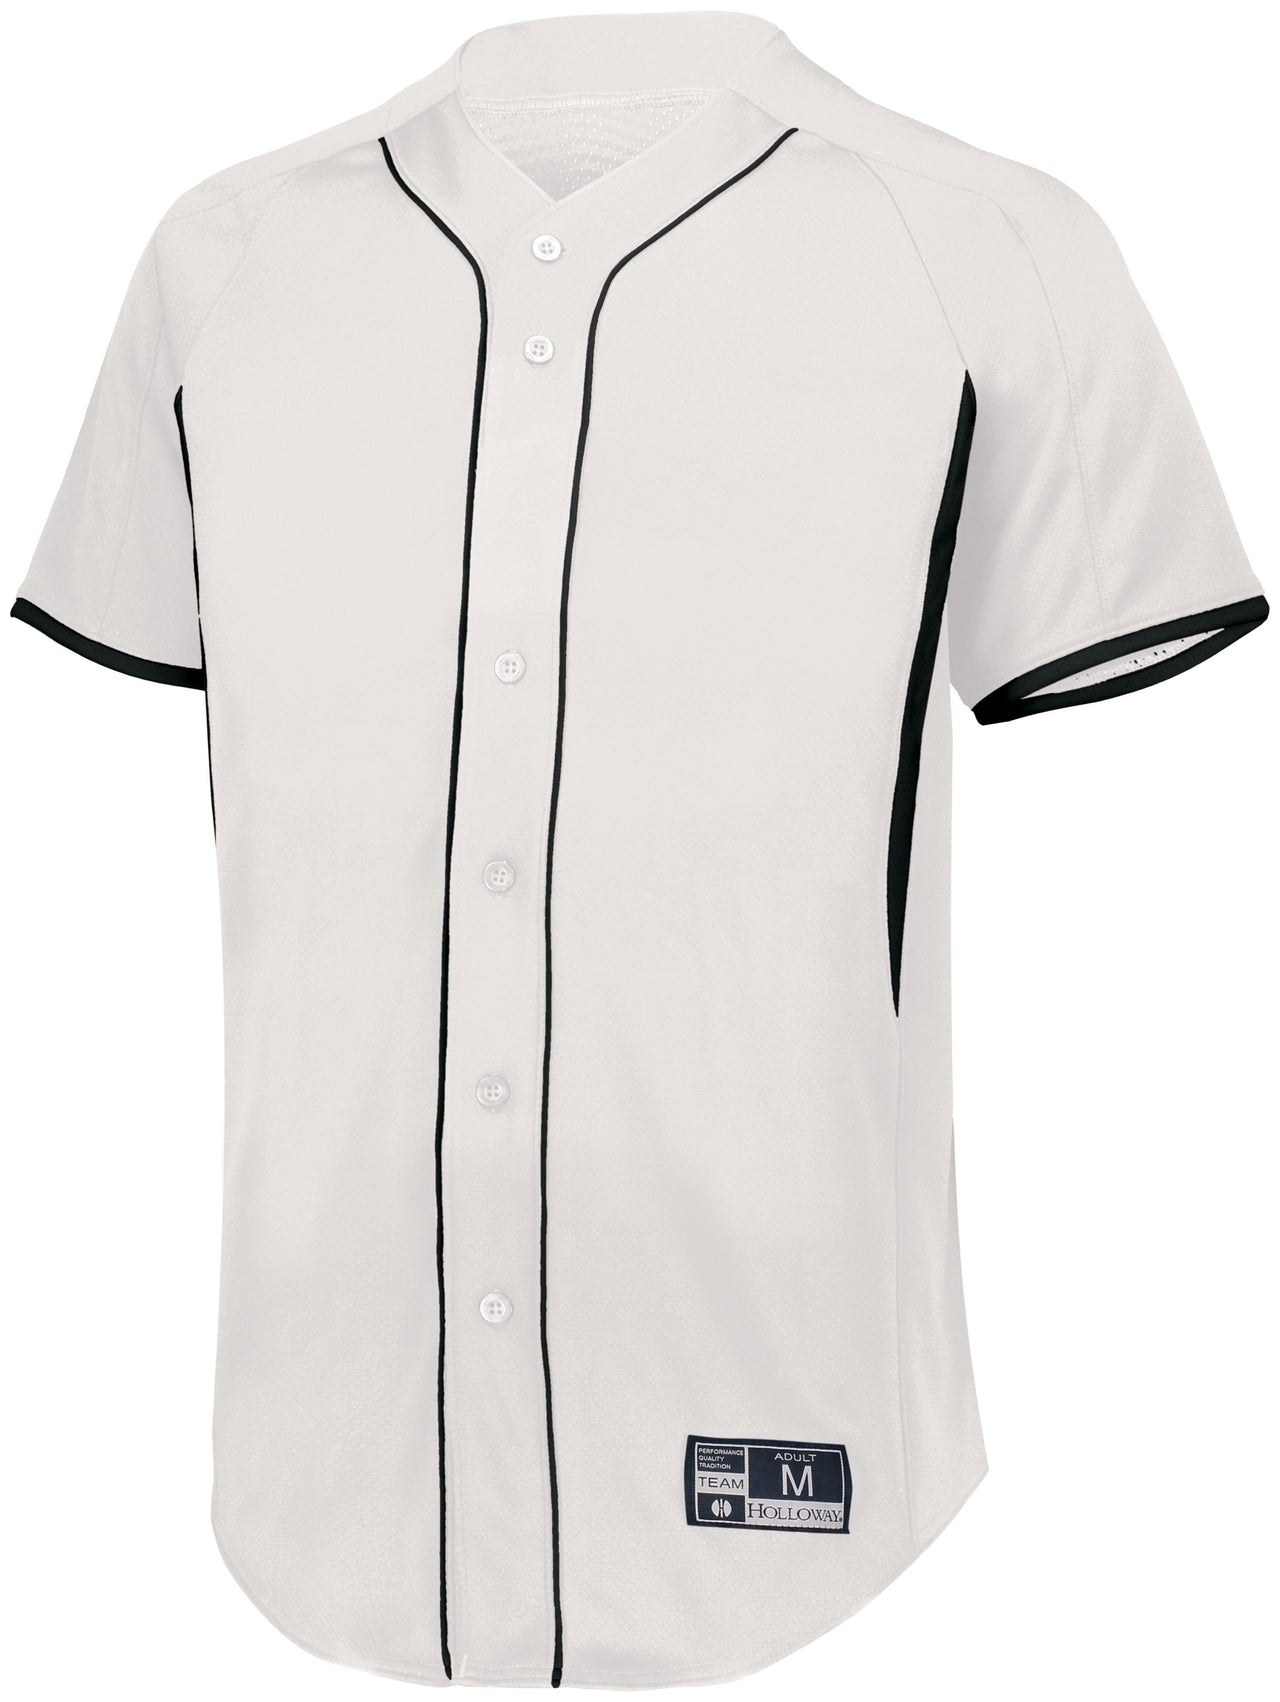 Game7 Full-Button Baseball Jersey - 221025